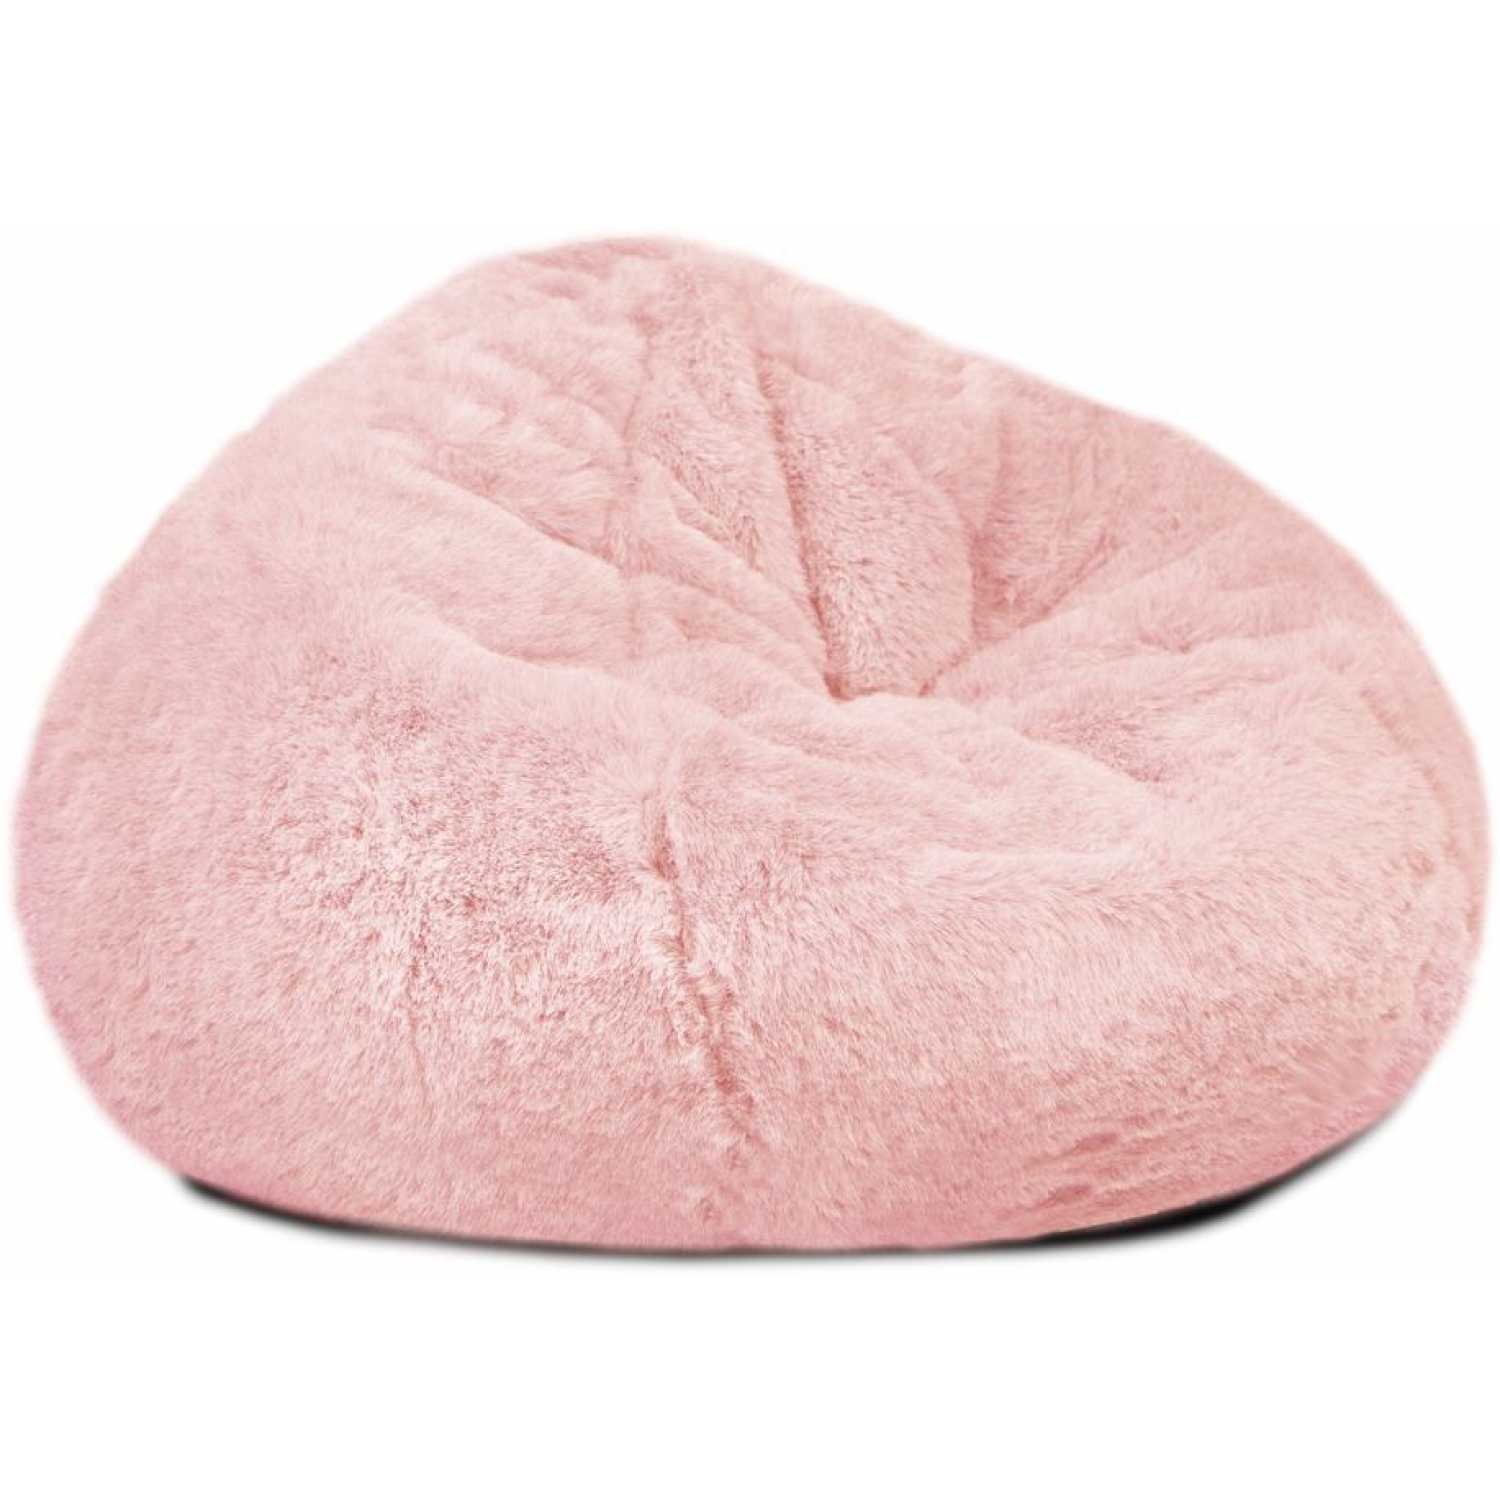 rucomfy Hugge Faux Fur Bean Bag - Pink